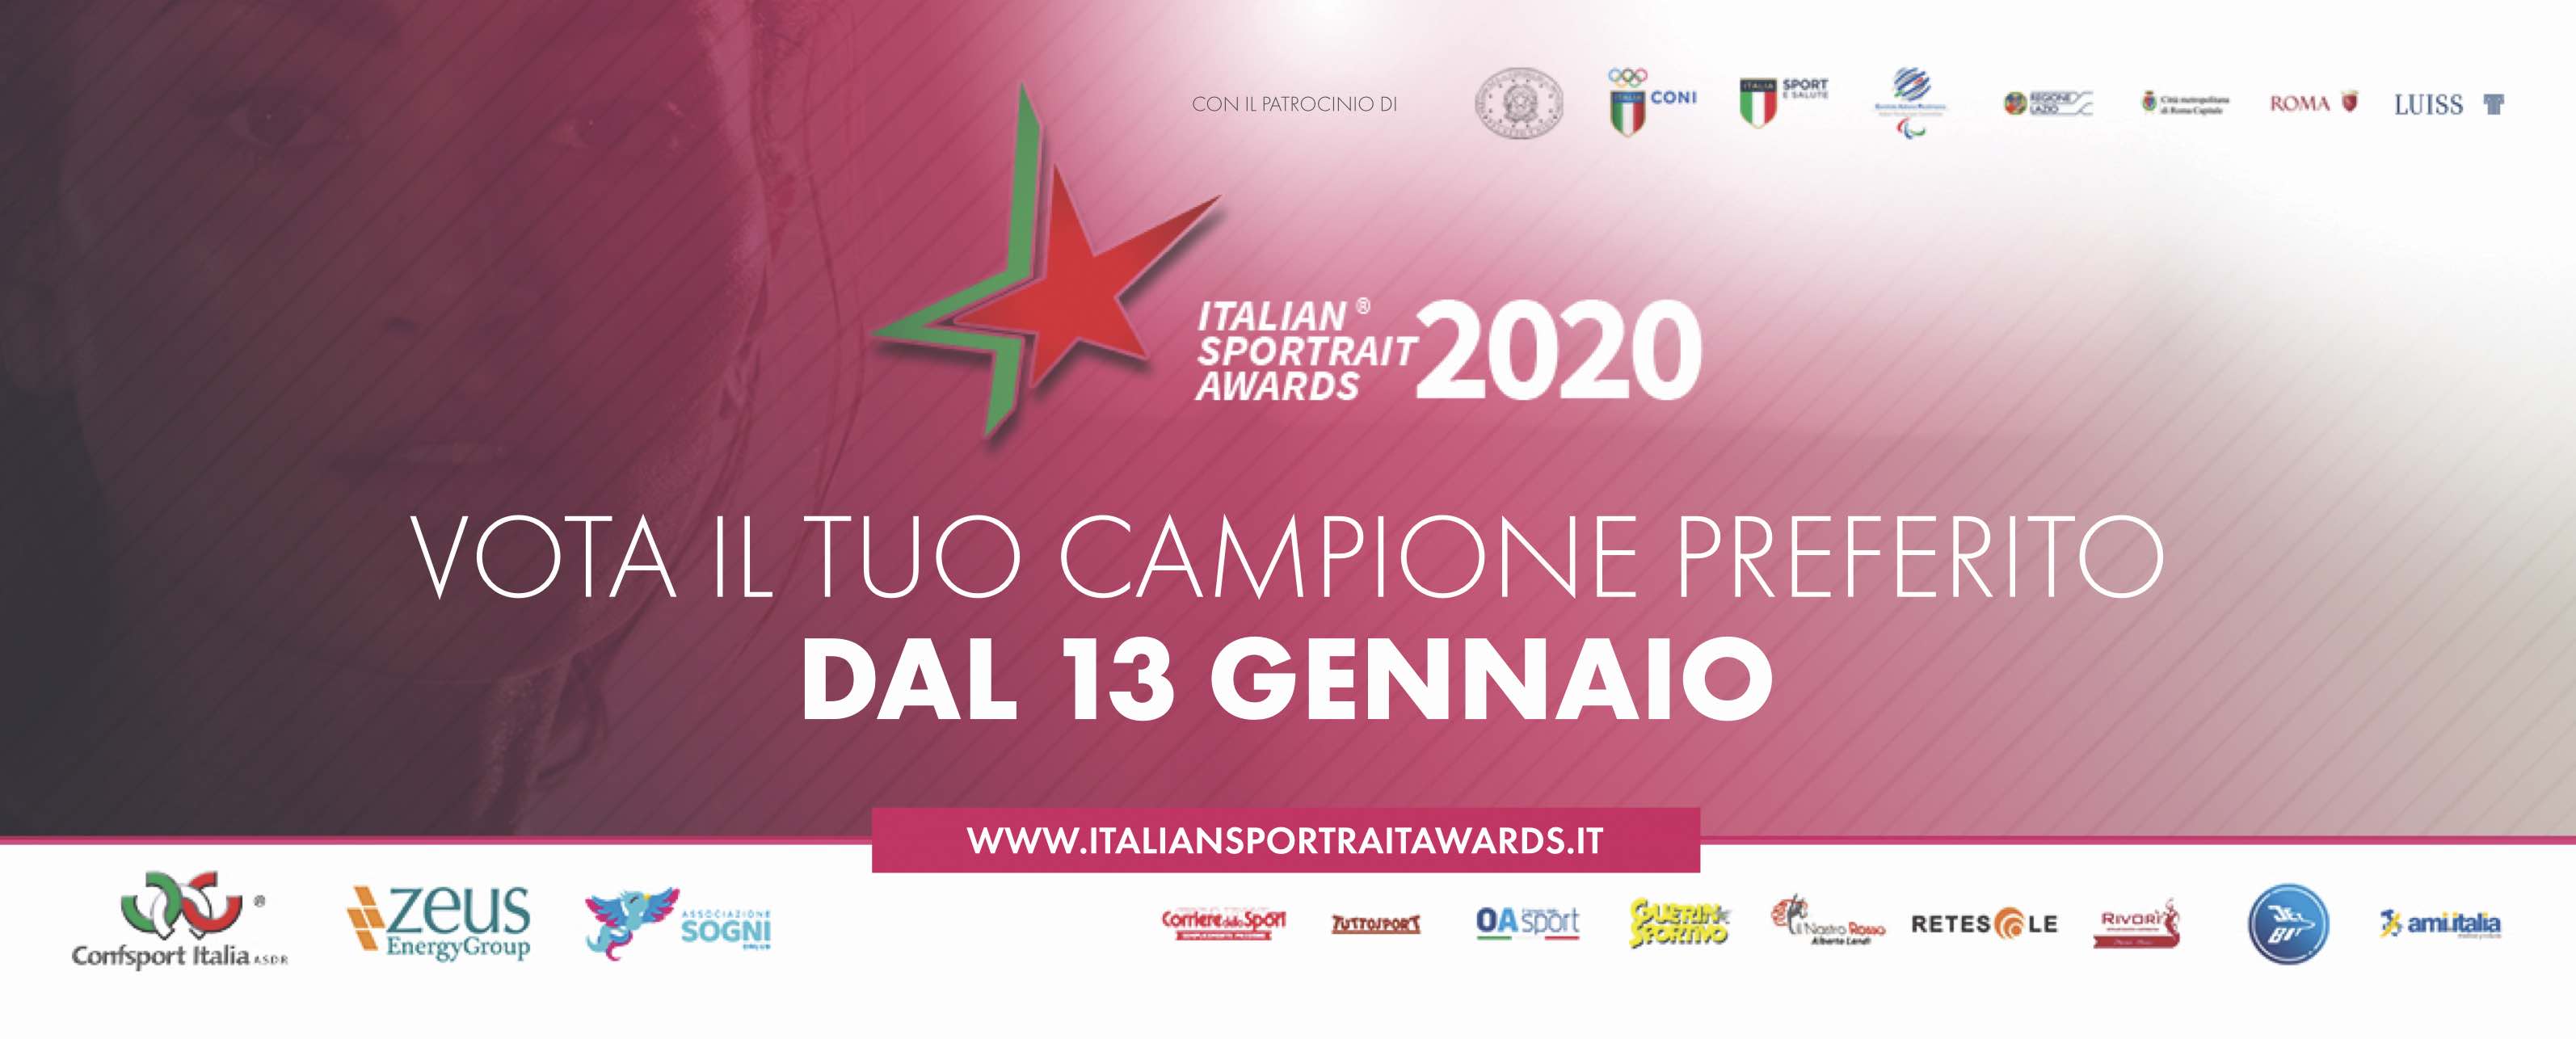 Italian Sportrait Awards 2020